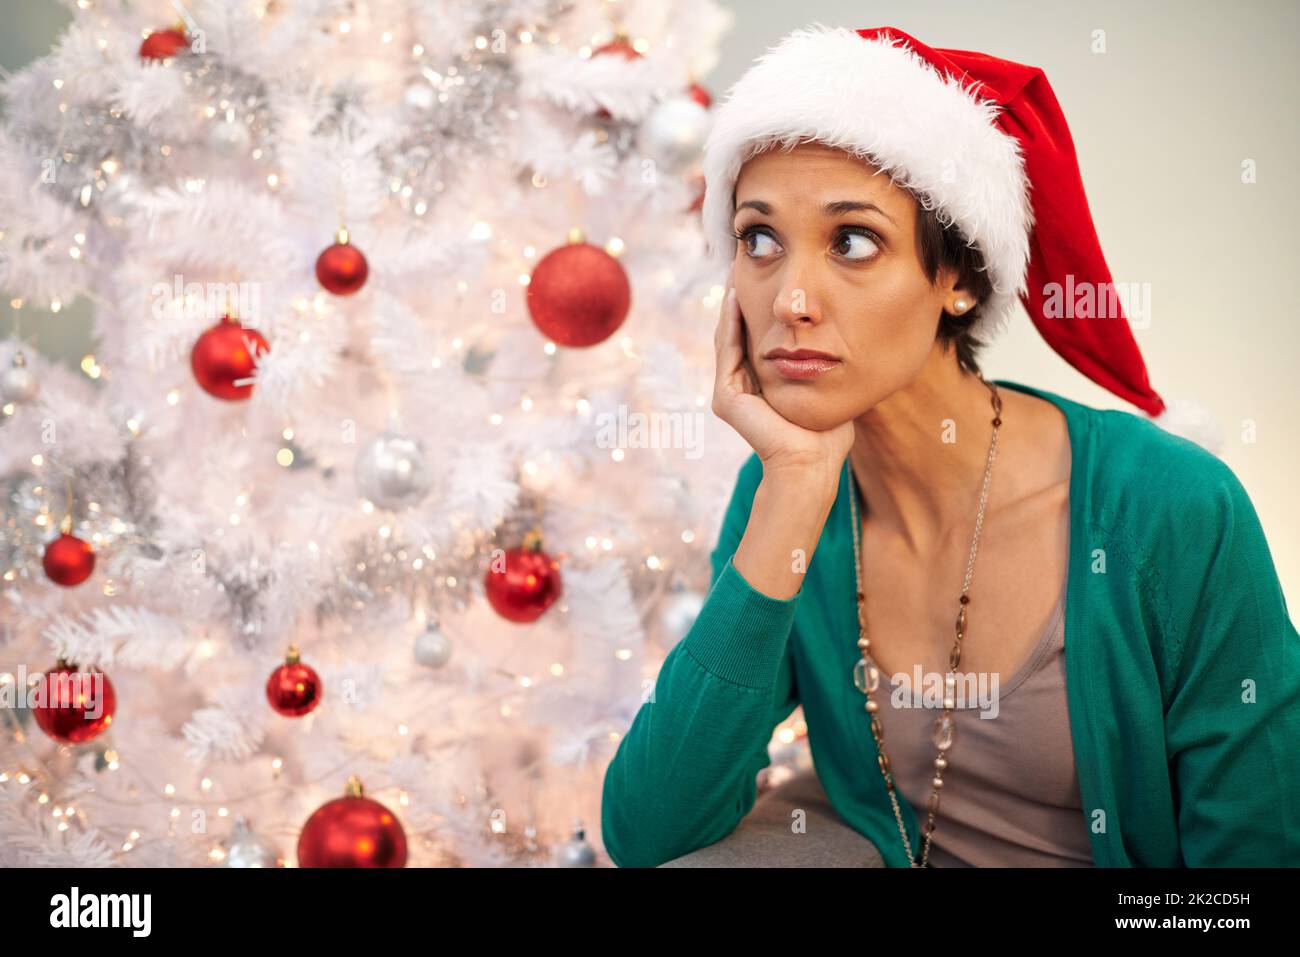 Whens santa va a llegar. Foto de una joven que se ve disgustada en la época de Navidad. Foto de stock